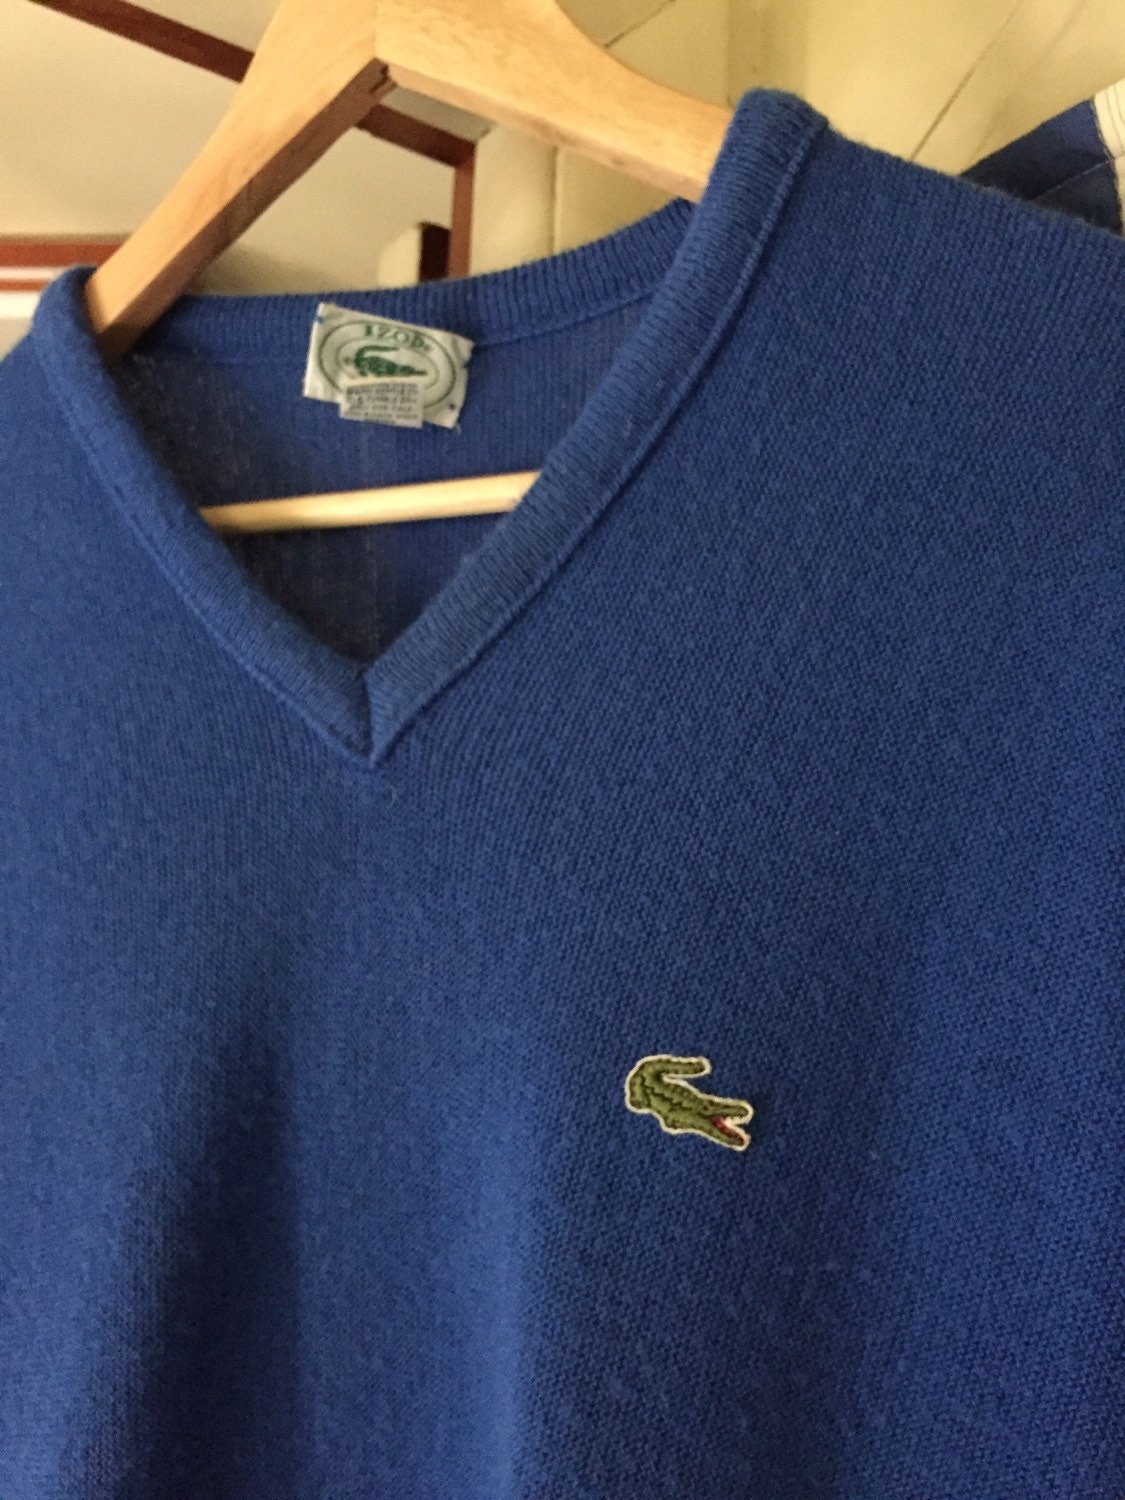 Sweater XL izod lacoste alligator V neck blue